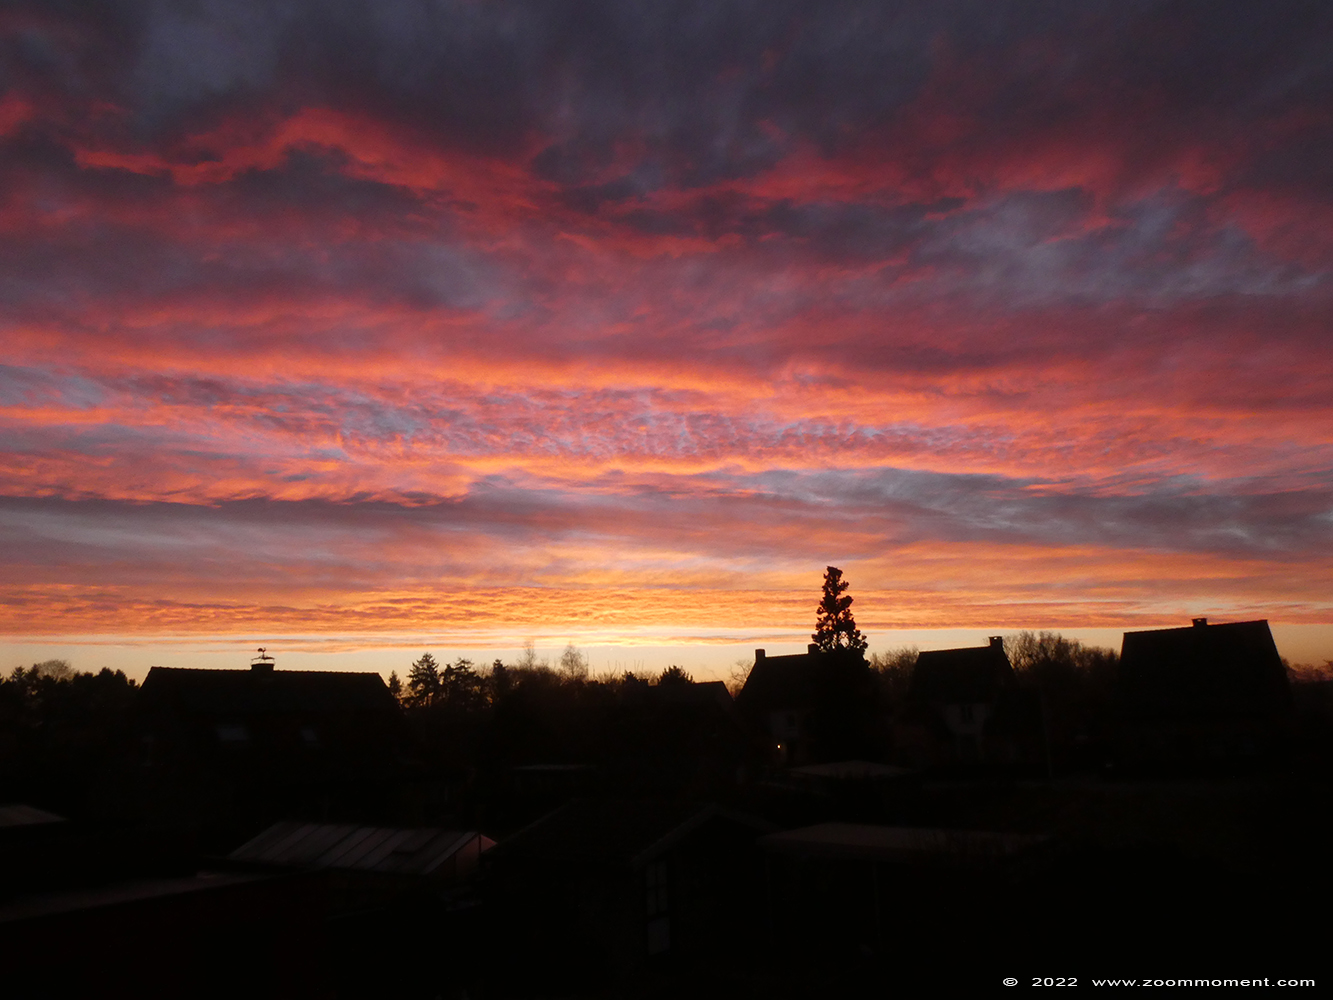 zonsopgang sunrise
Trefwoorden: Beerse Belgium zonsopgang sunrise